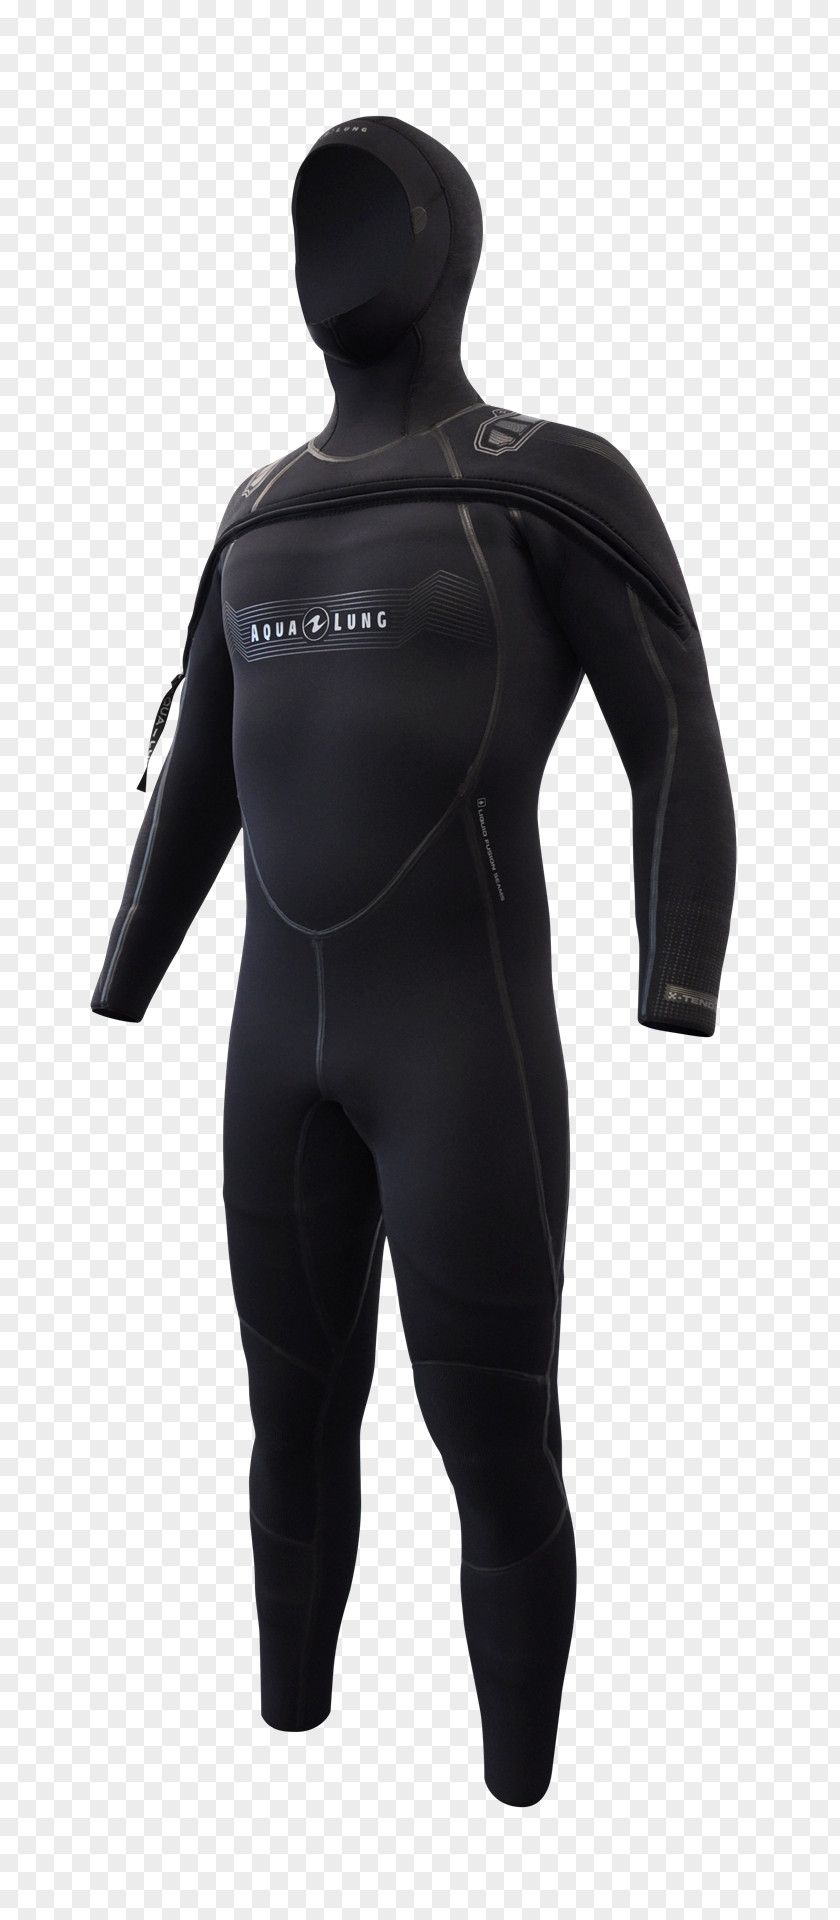 Suit Wetsuit Diving Scuba Set Underwater Snorkeling PNG